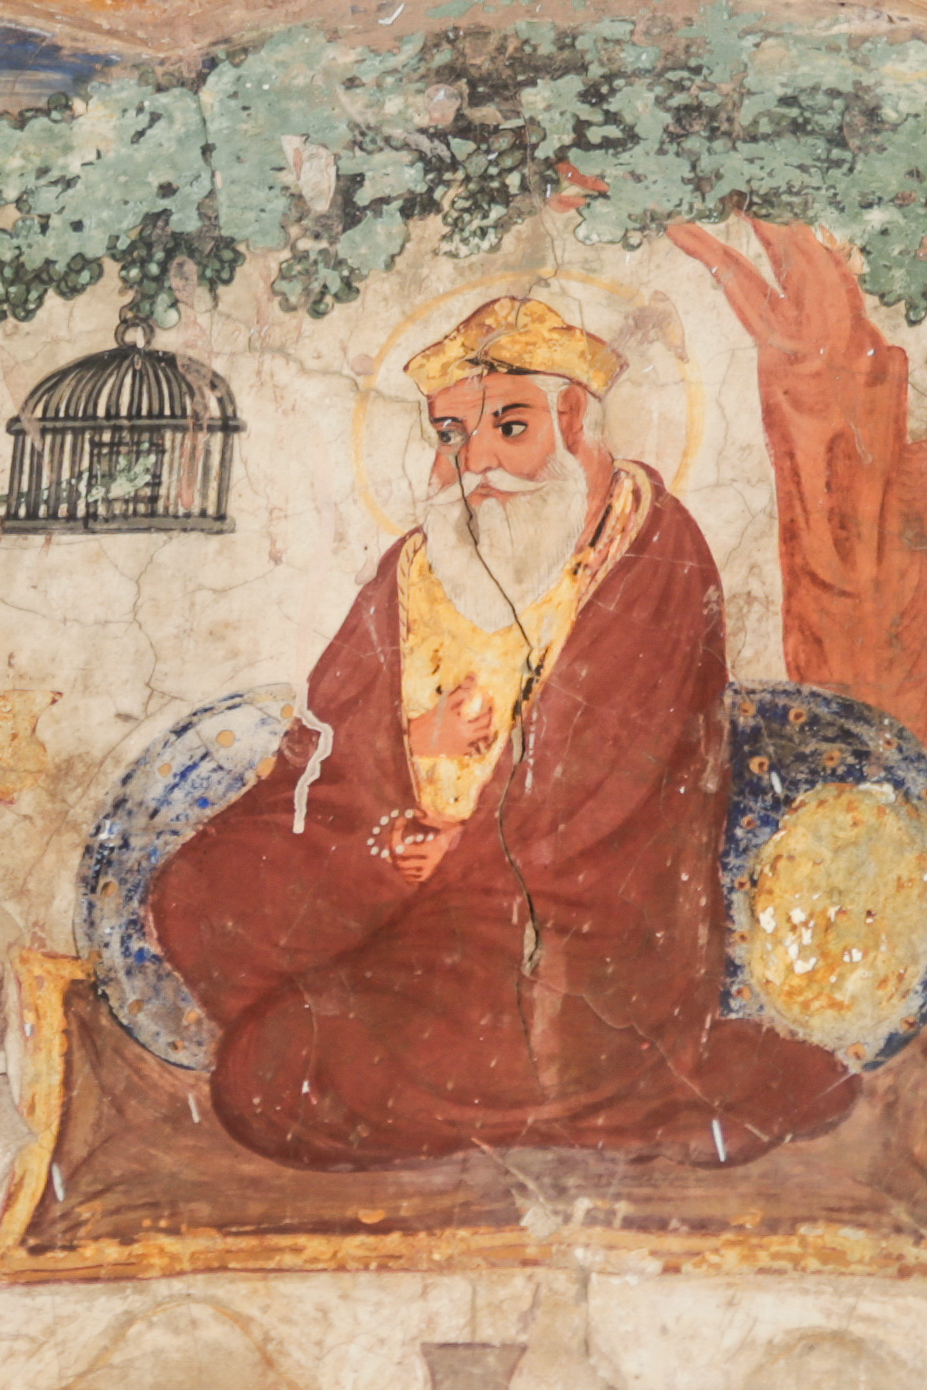 Mural painting of Guru Nanak from Gurdwara Baba Atal Rai